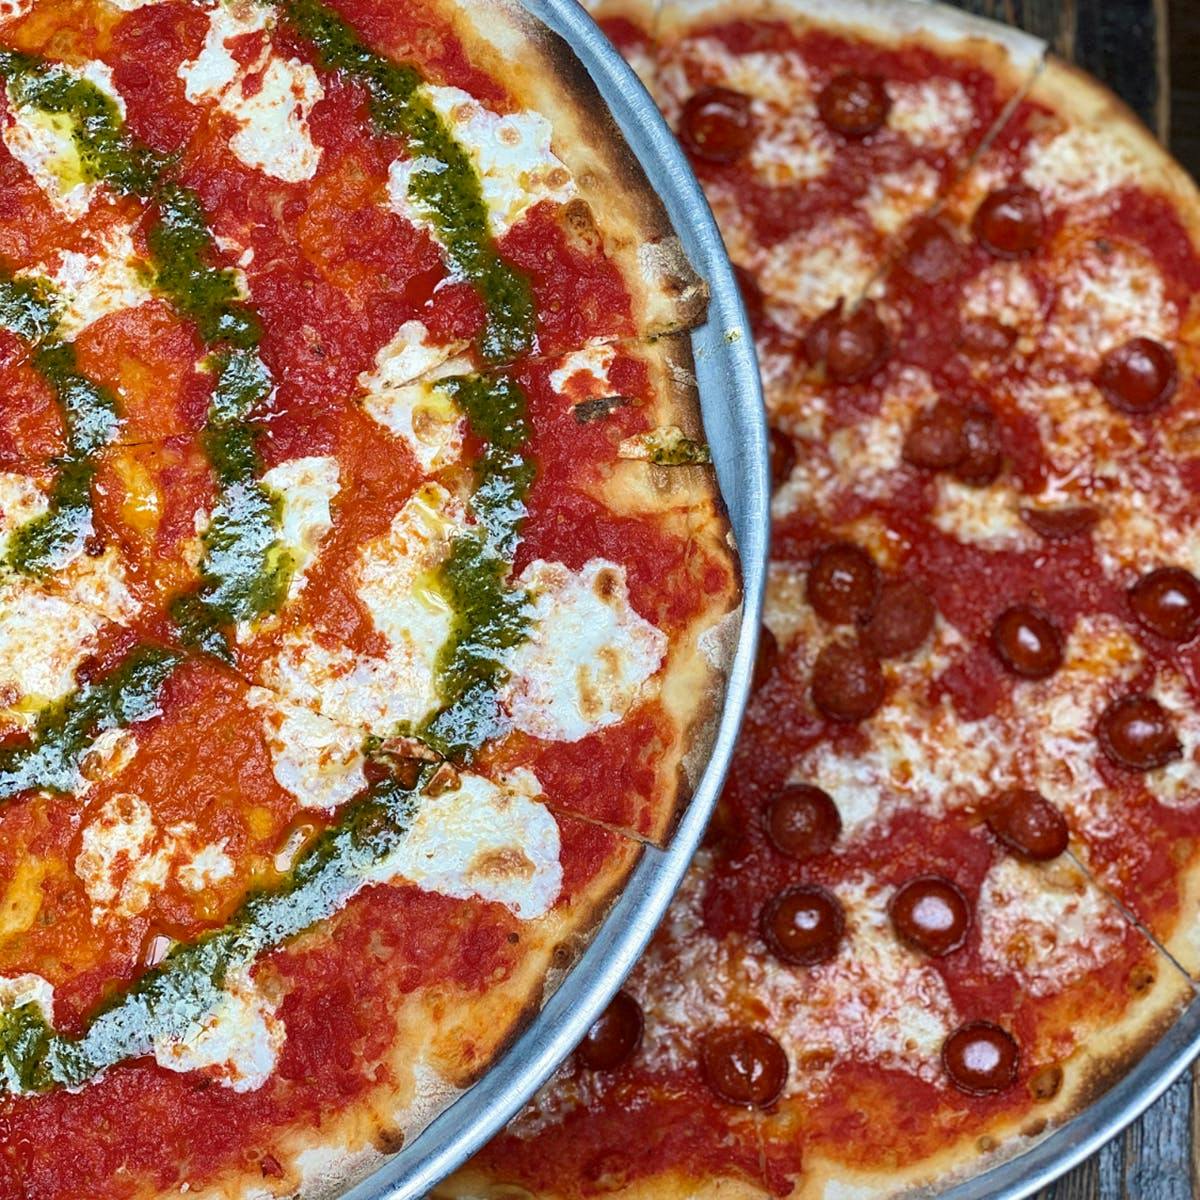 Make Your Own Rubirosa Pizza Kit - Classic Pizza, GLUTEN FREE